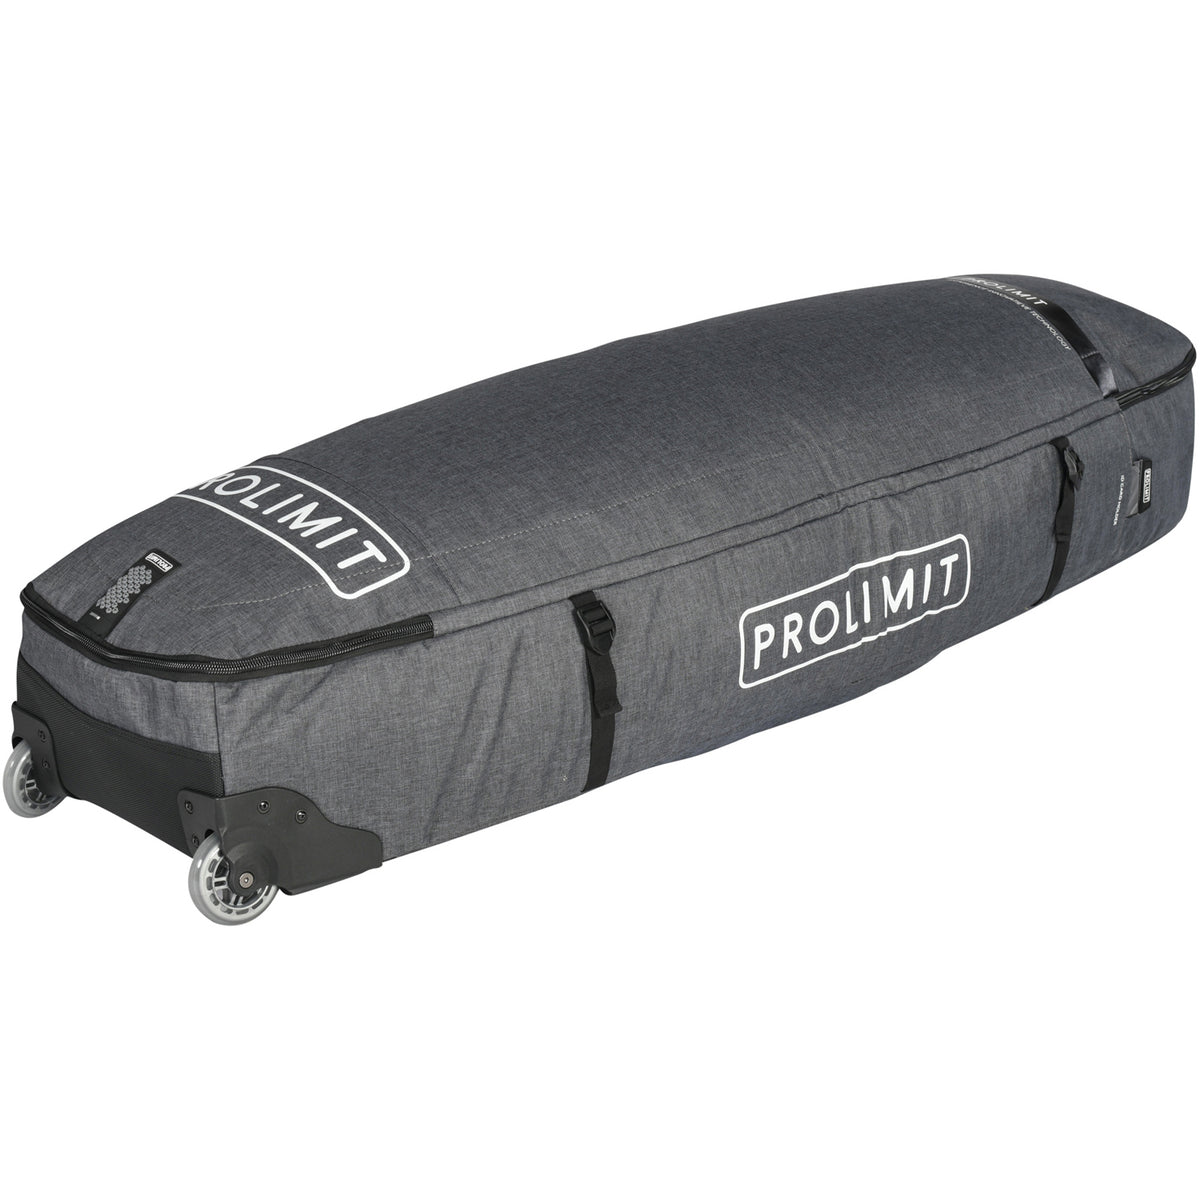 PROLIMIT KITE BOARD BAG TRAVELER WITH WHEELS GREY/WHITE travel bag